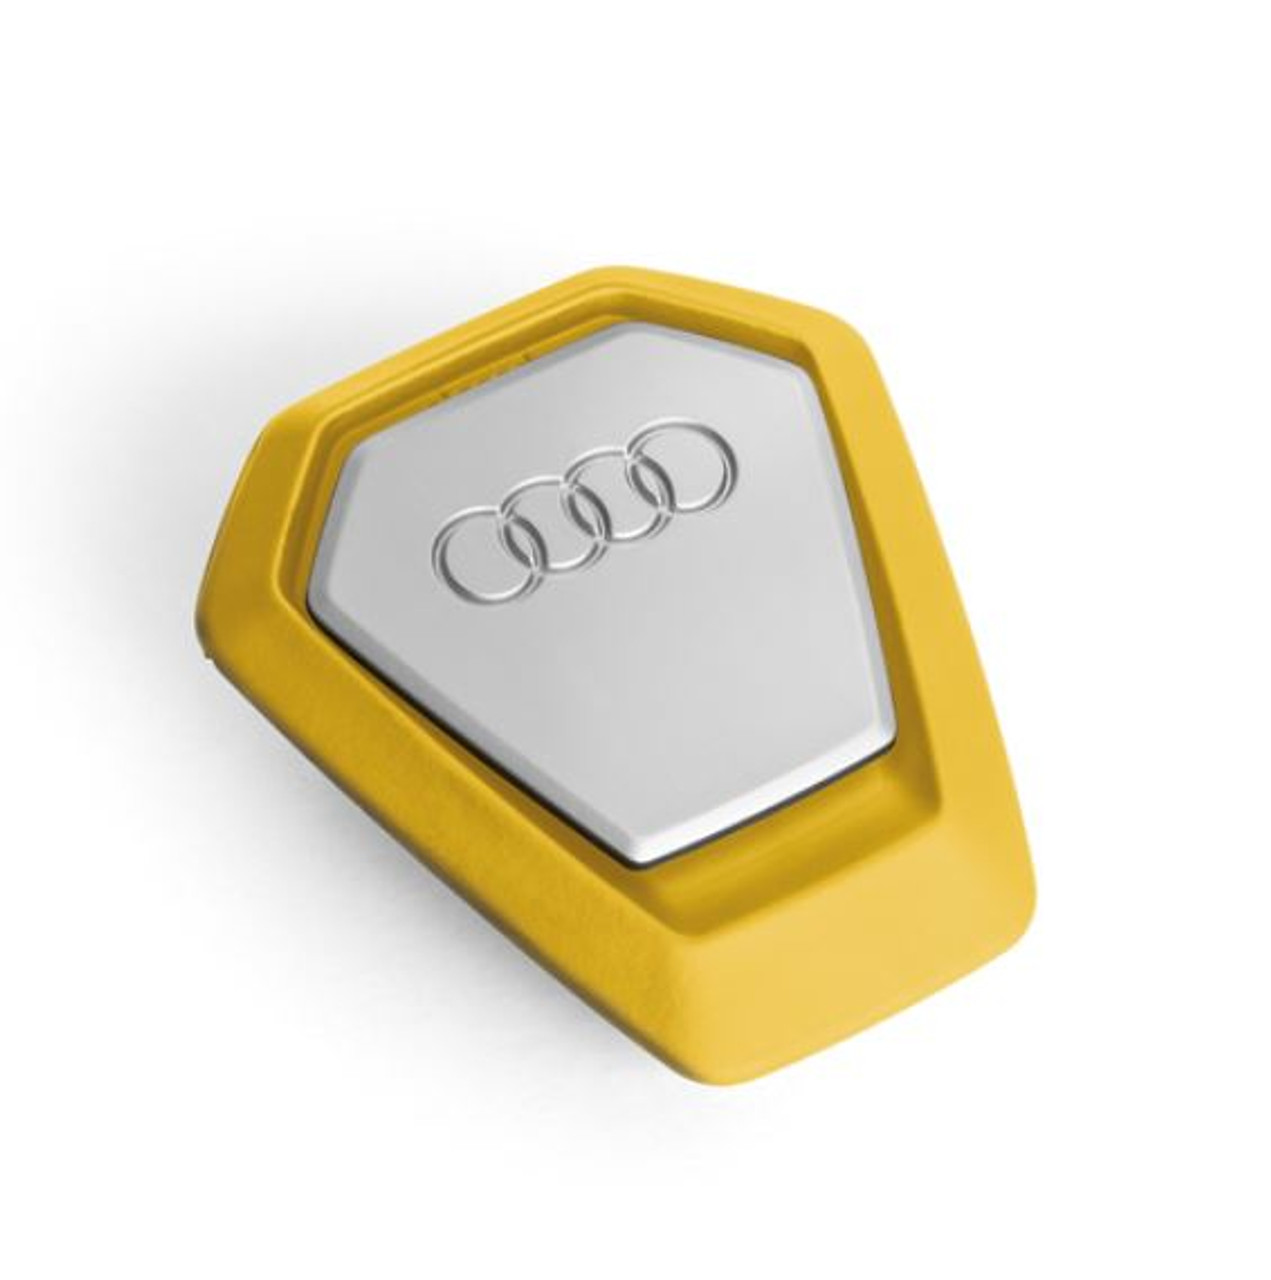 Genuine Audi Air freshener dispenser, yellow, invigorating